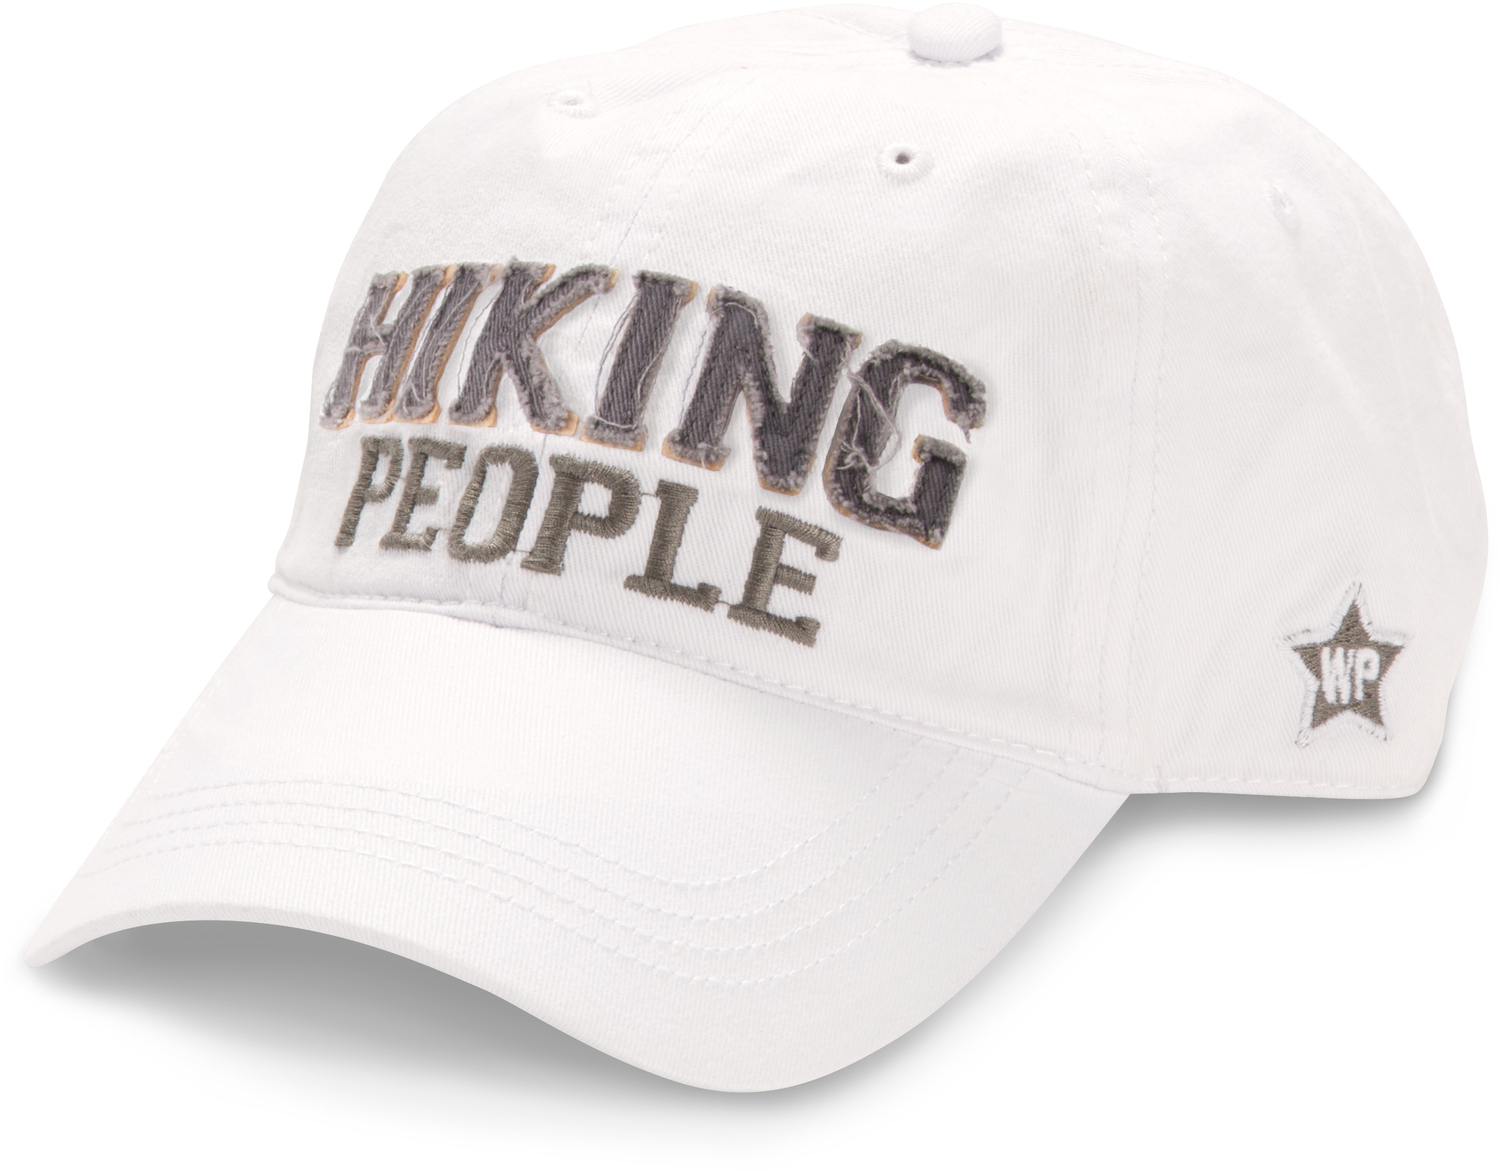 Hiking People by We People - Hiking People - White Adjustable Hat